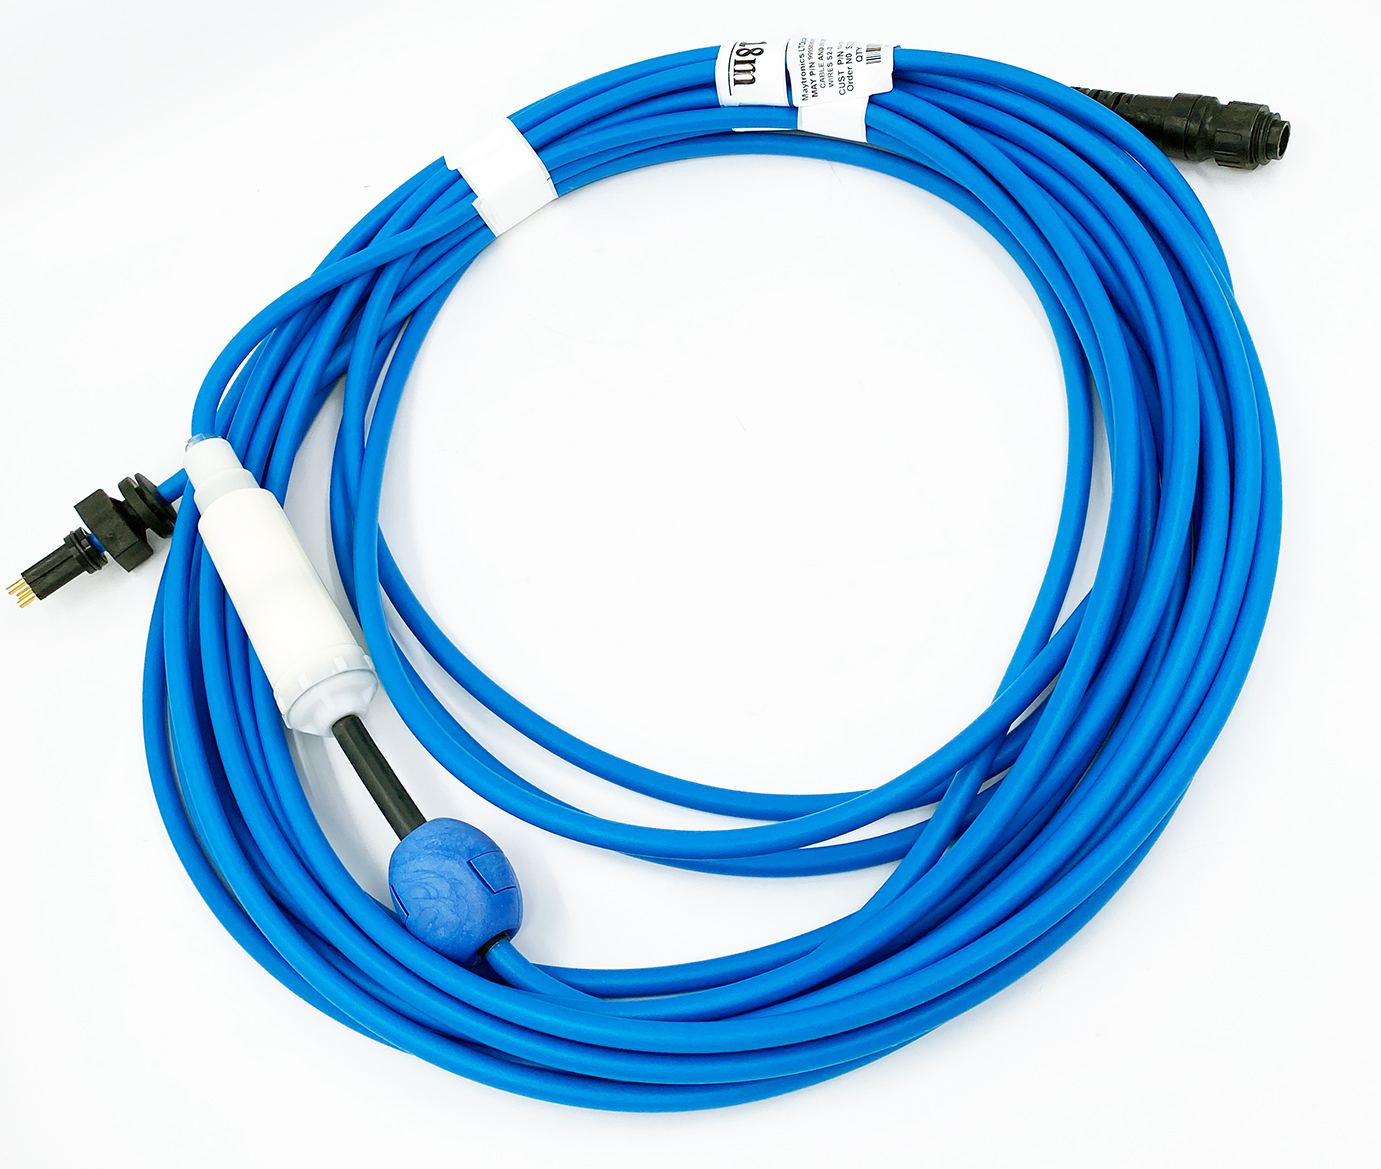 Dolphin Kabel 18m mit Swivel (S300i ab Februar 2021)